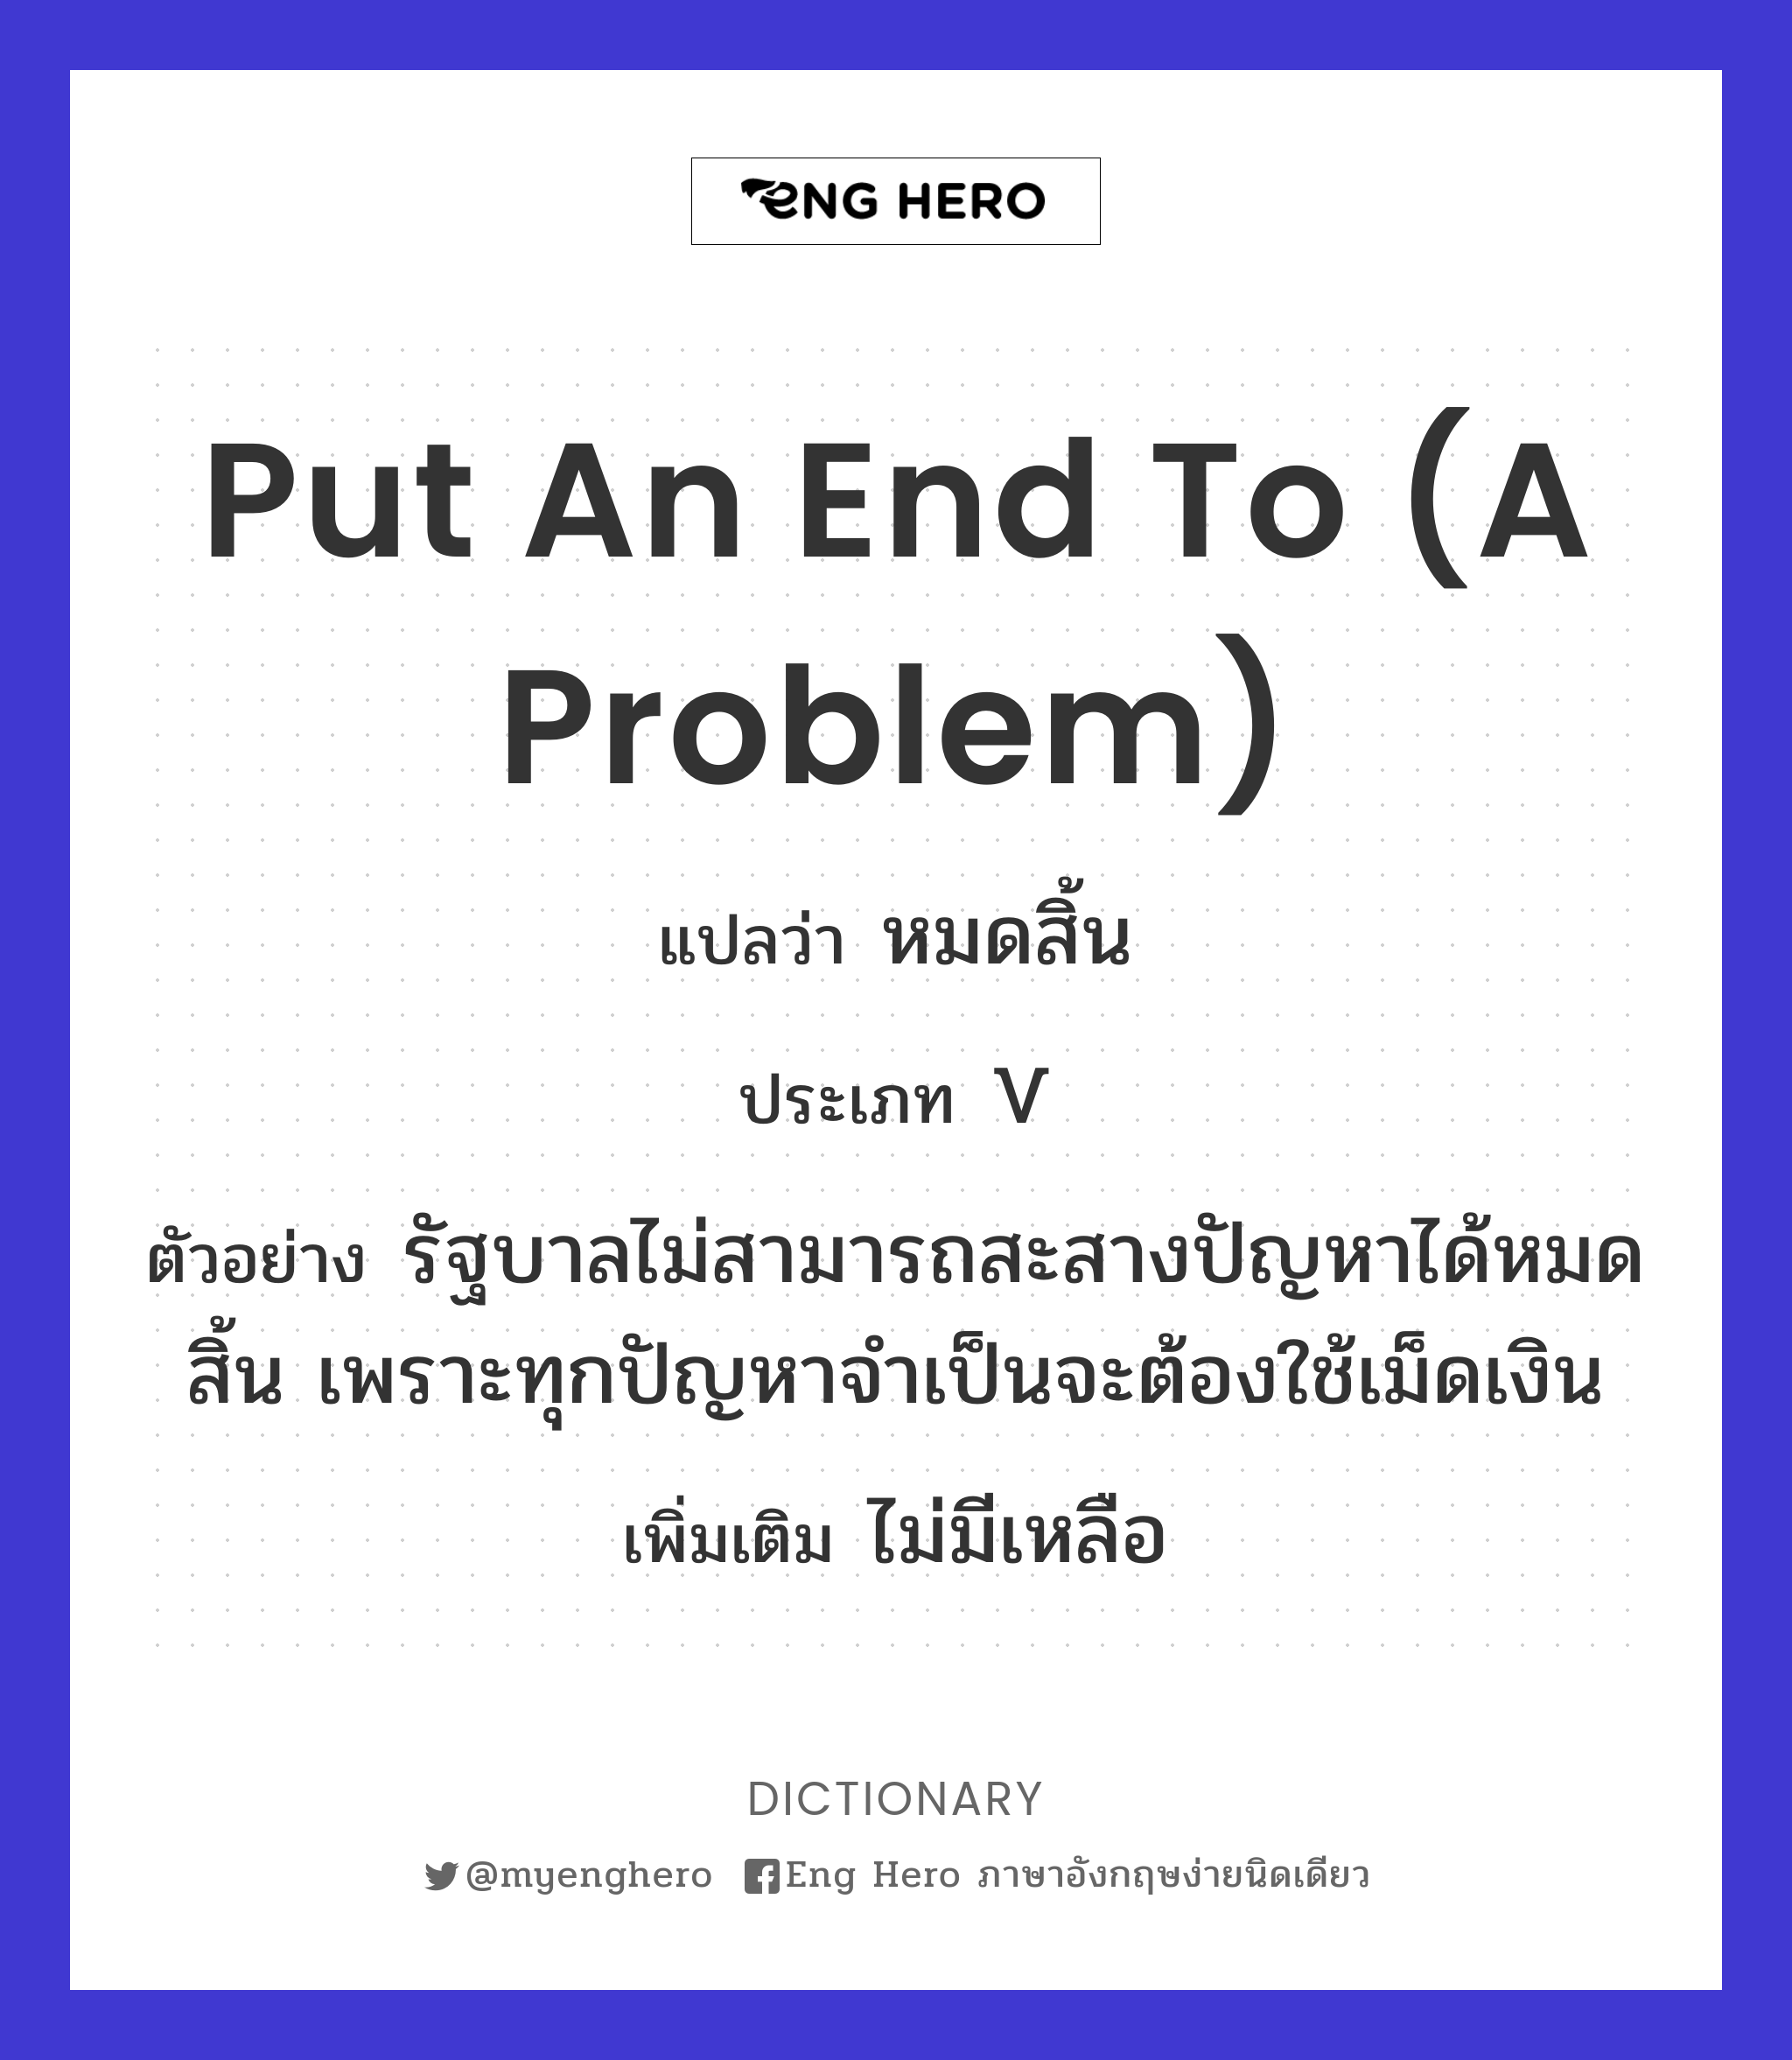 put an end to (a problem)